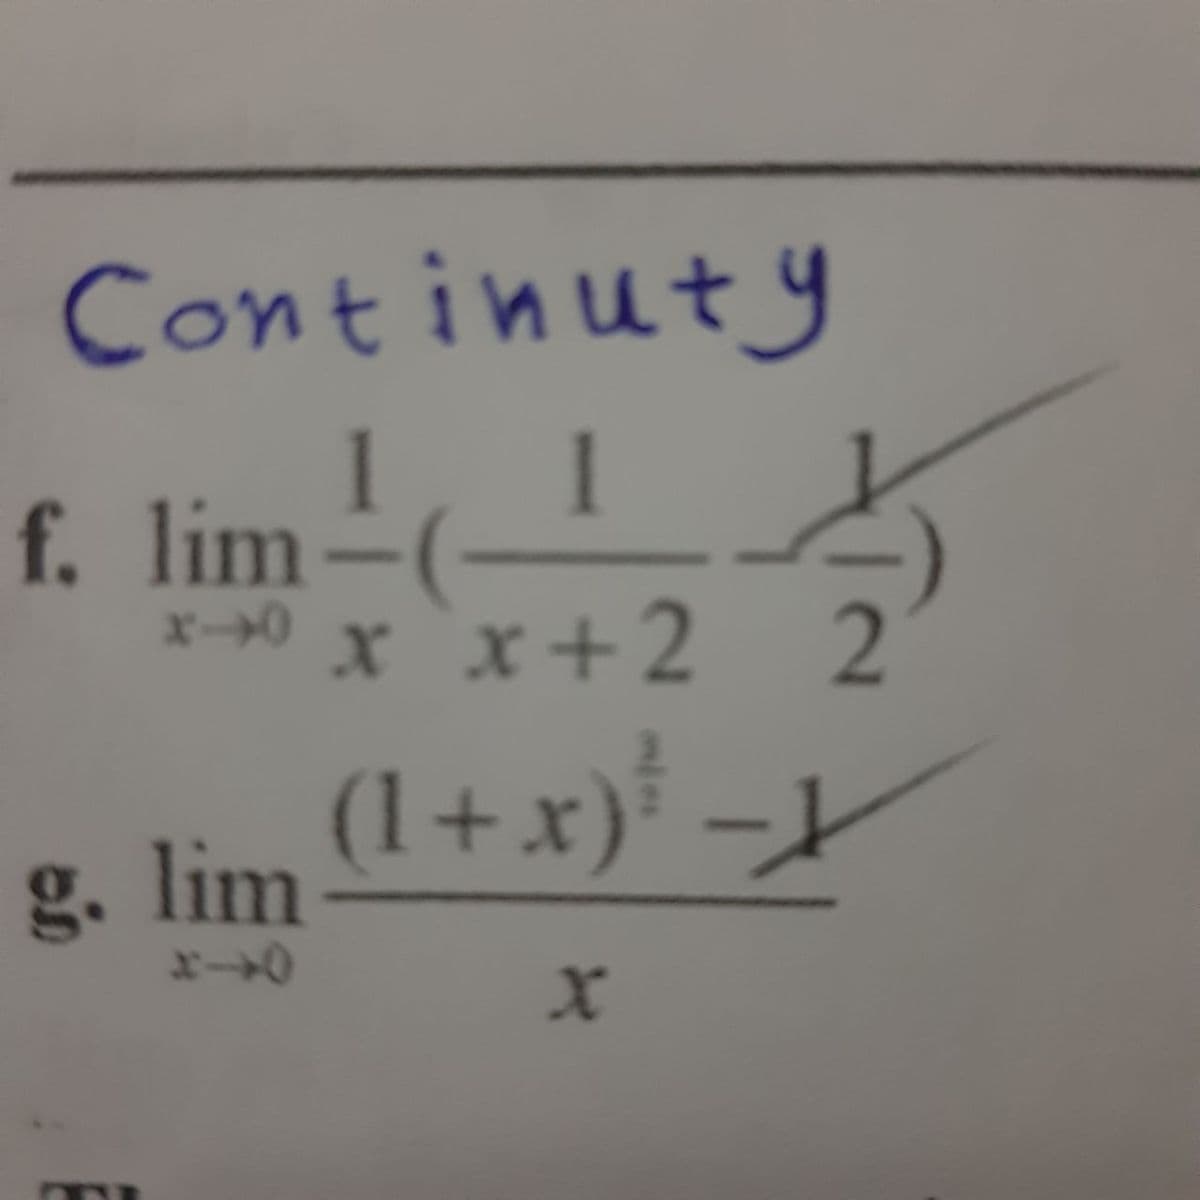 Continuty
1
1
f. lim-(
x-→0 x °x+2
(1+x)' -}
g. lim
